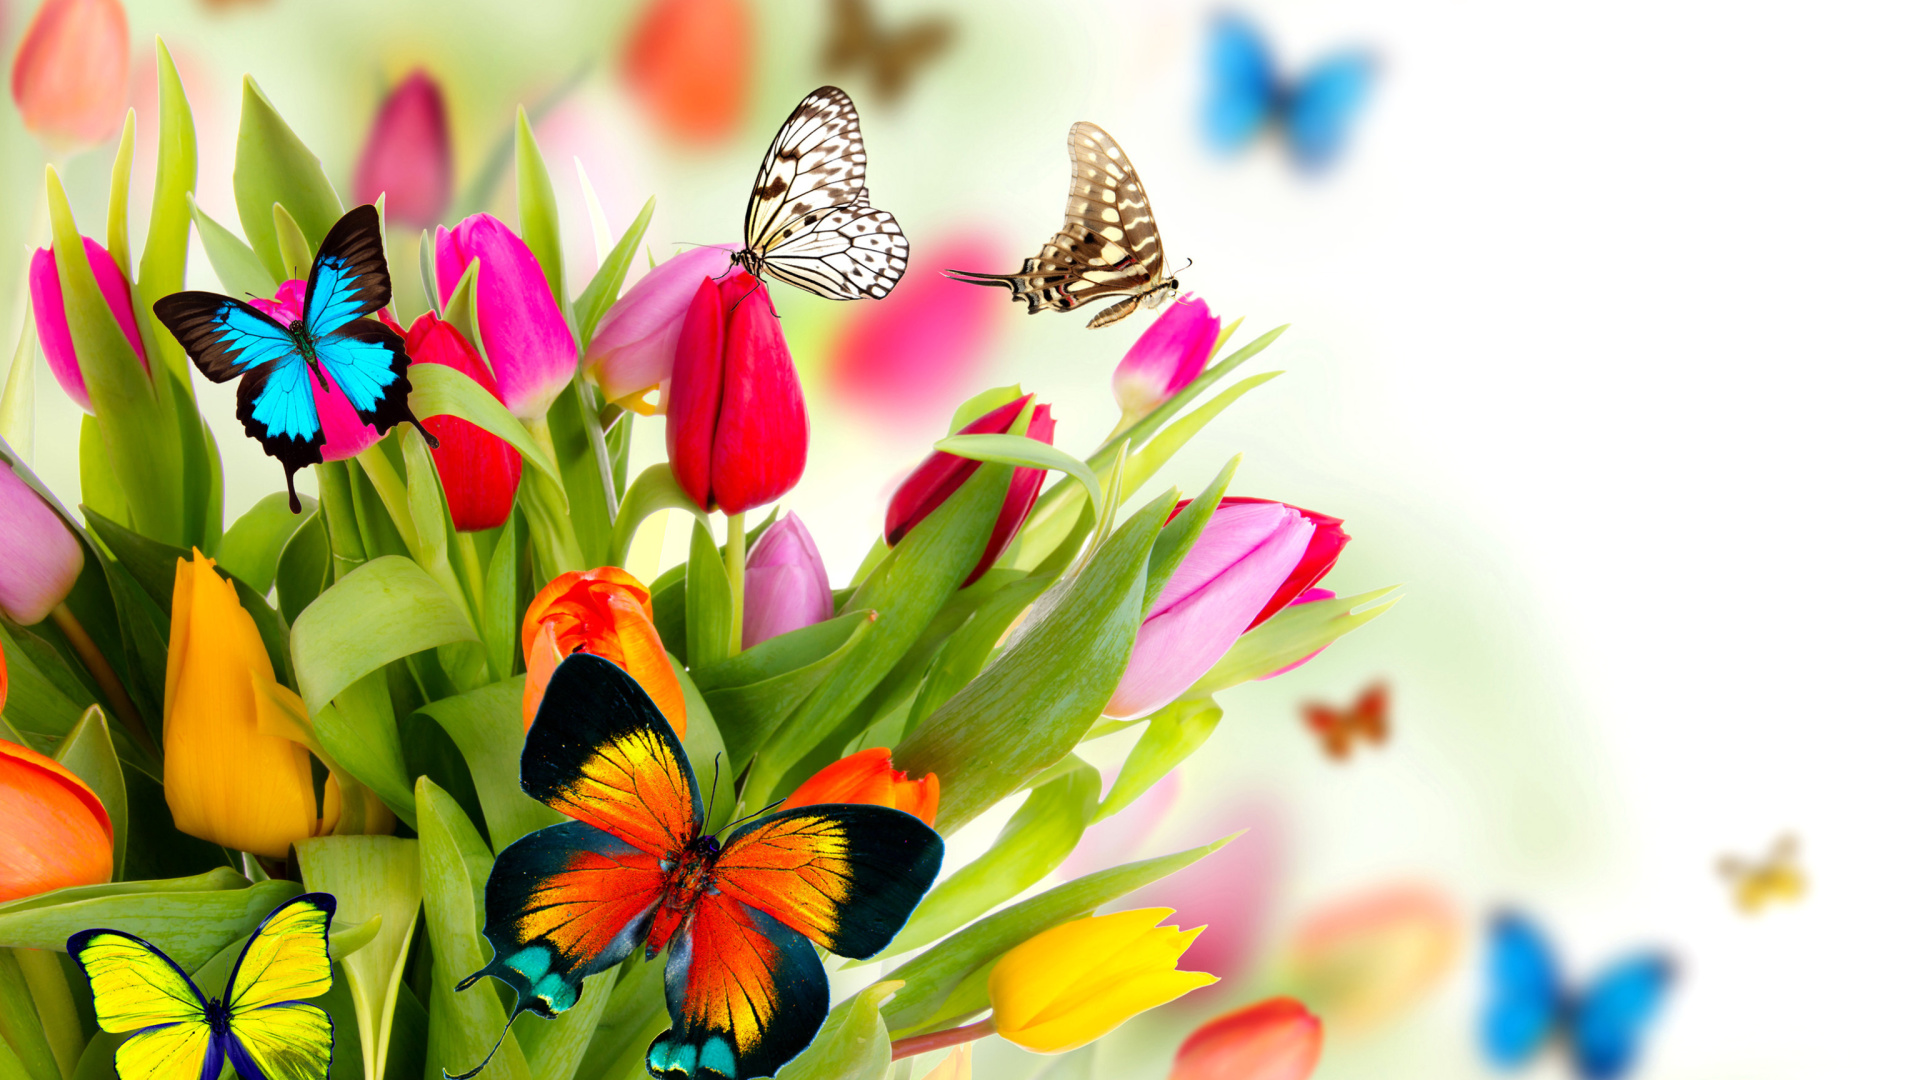 Tulips and Butterflies Wallpaper for Desktop 1920x1080 Full HD